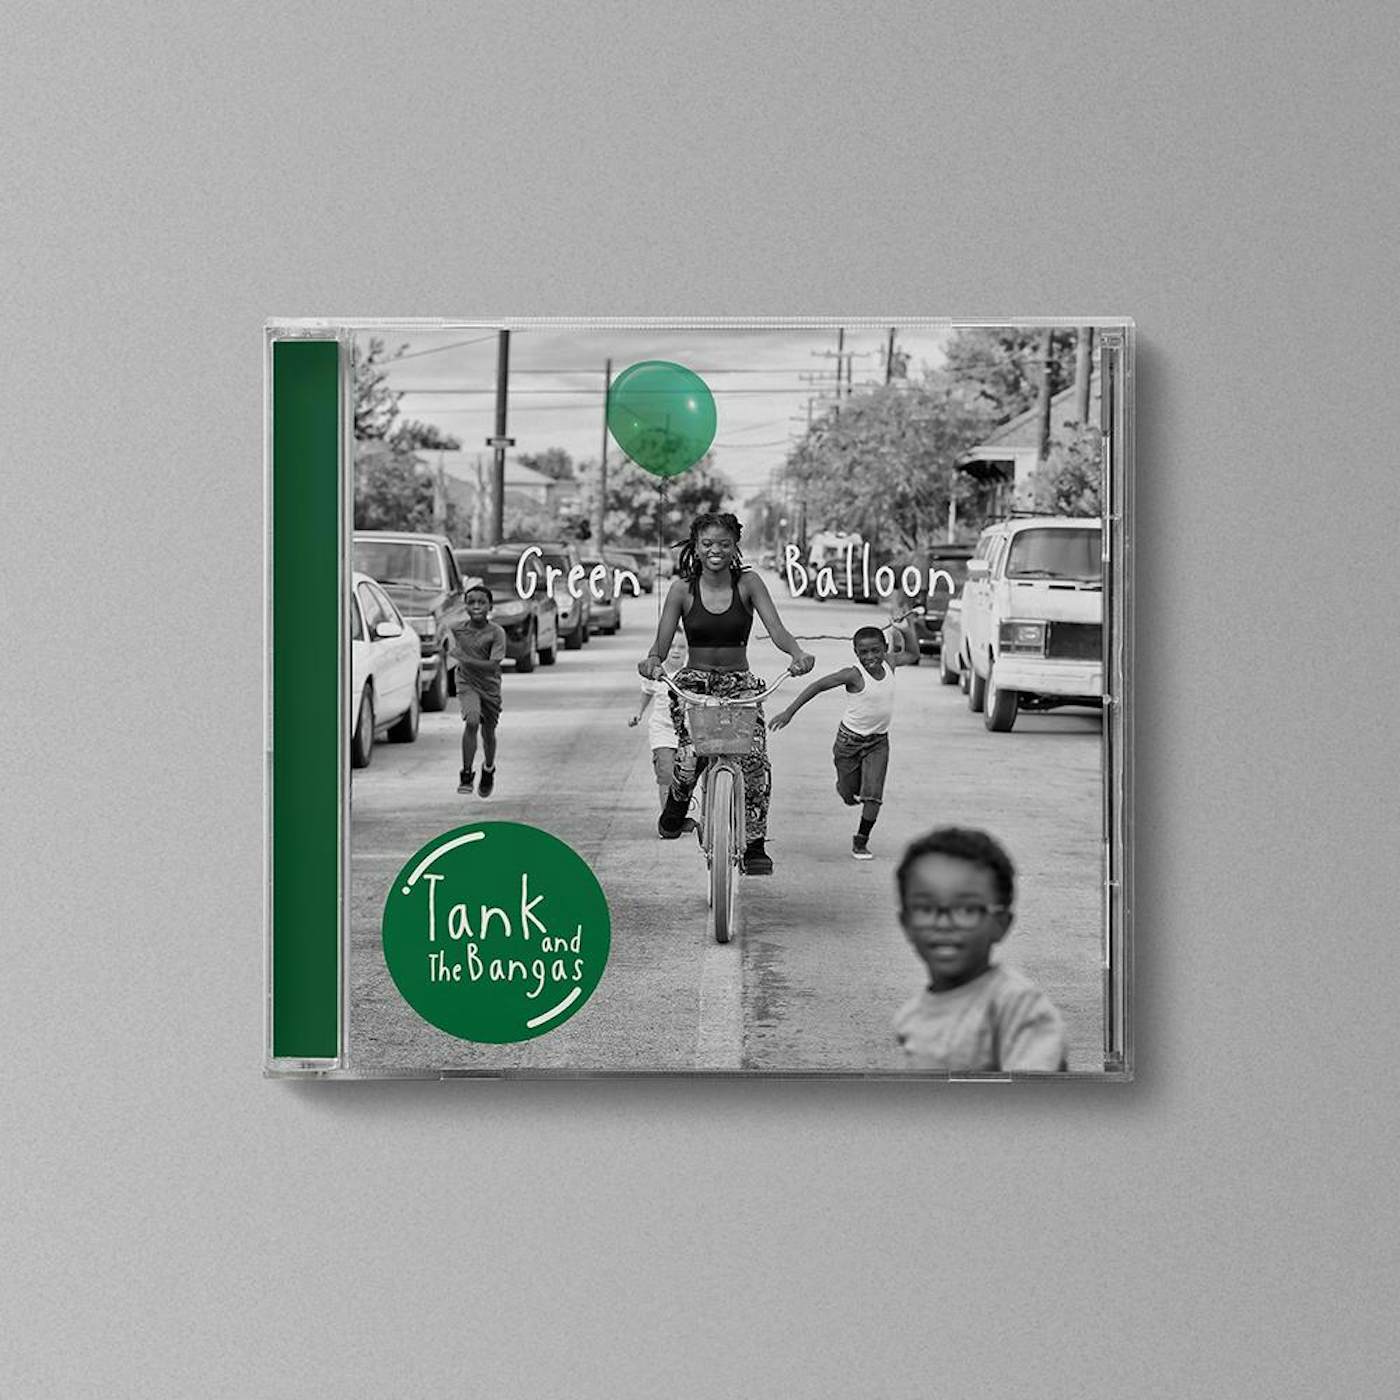 Tank and The Bangas Green Balloon CD